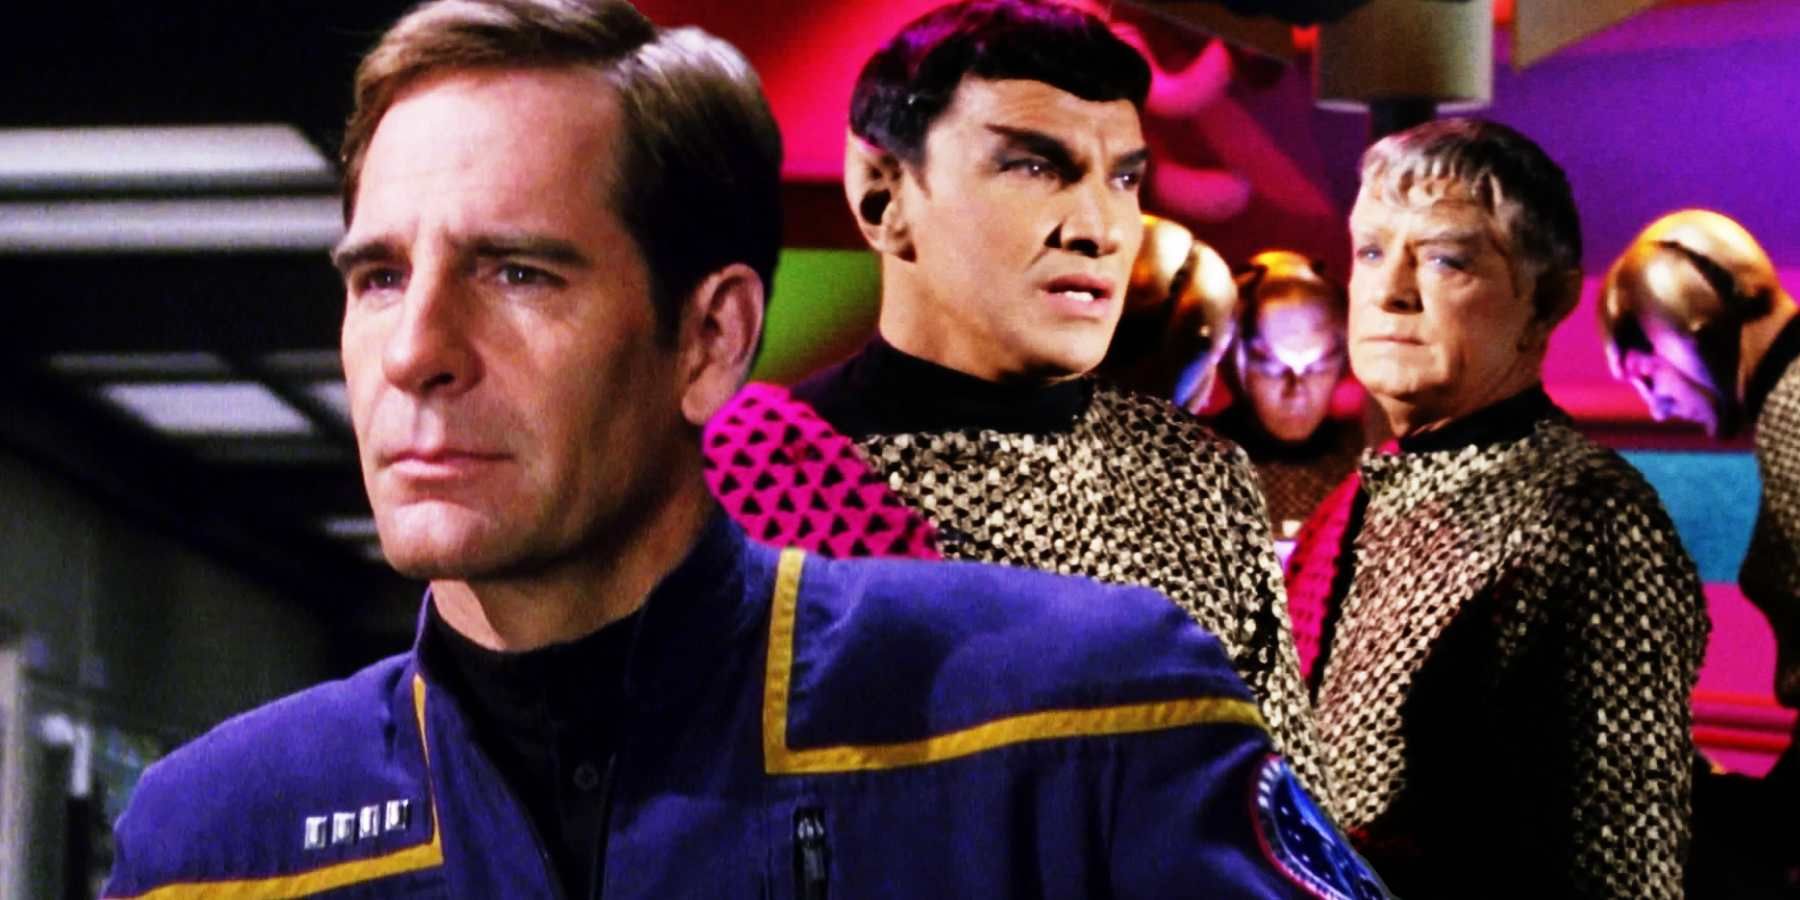 Scott Bakula as Captain Jonathan Archer and Mark Lennard as the Romulan Captain in Star Trek